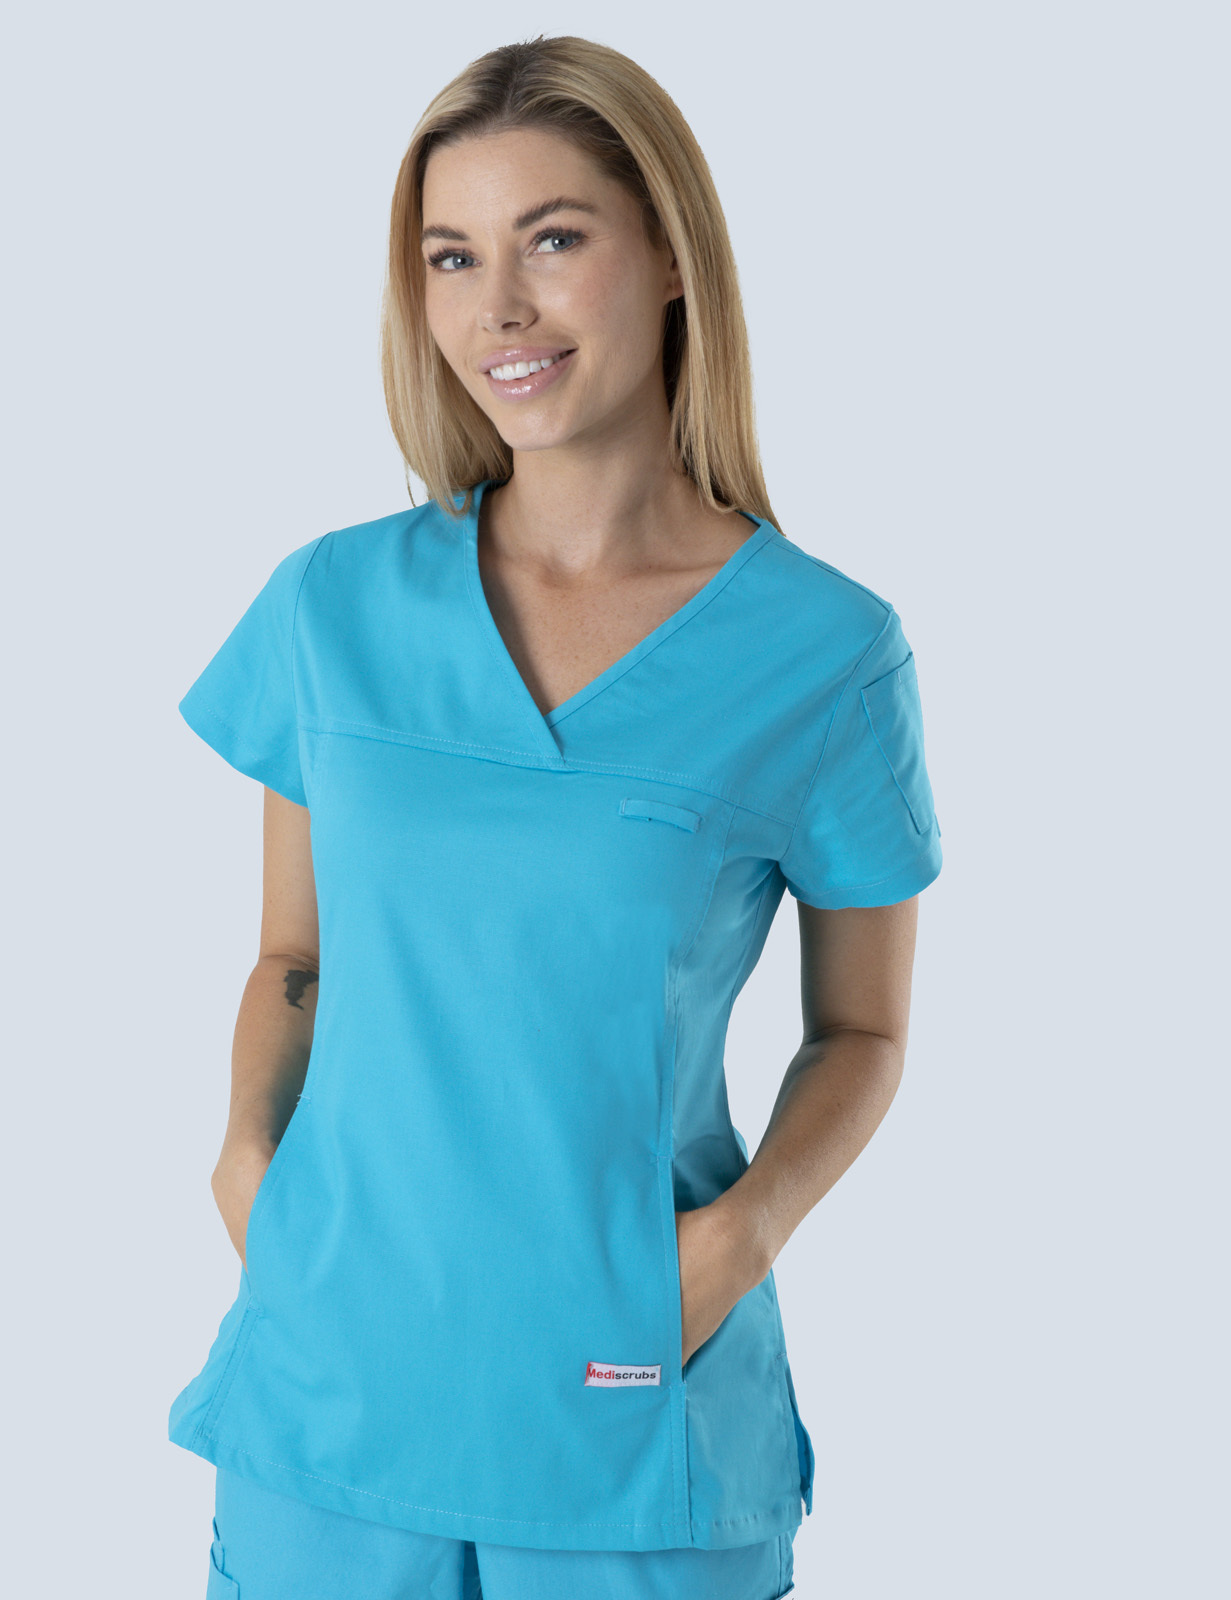 Queensland Children's Hospital Emergency Department Assistant Nurse Unit Manager Uniform Top Bundle  (Women's Fit Top in Aqua incl Logos)